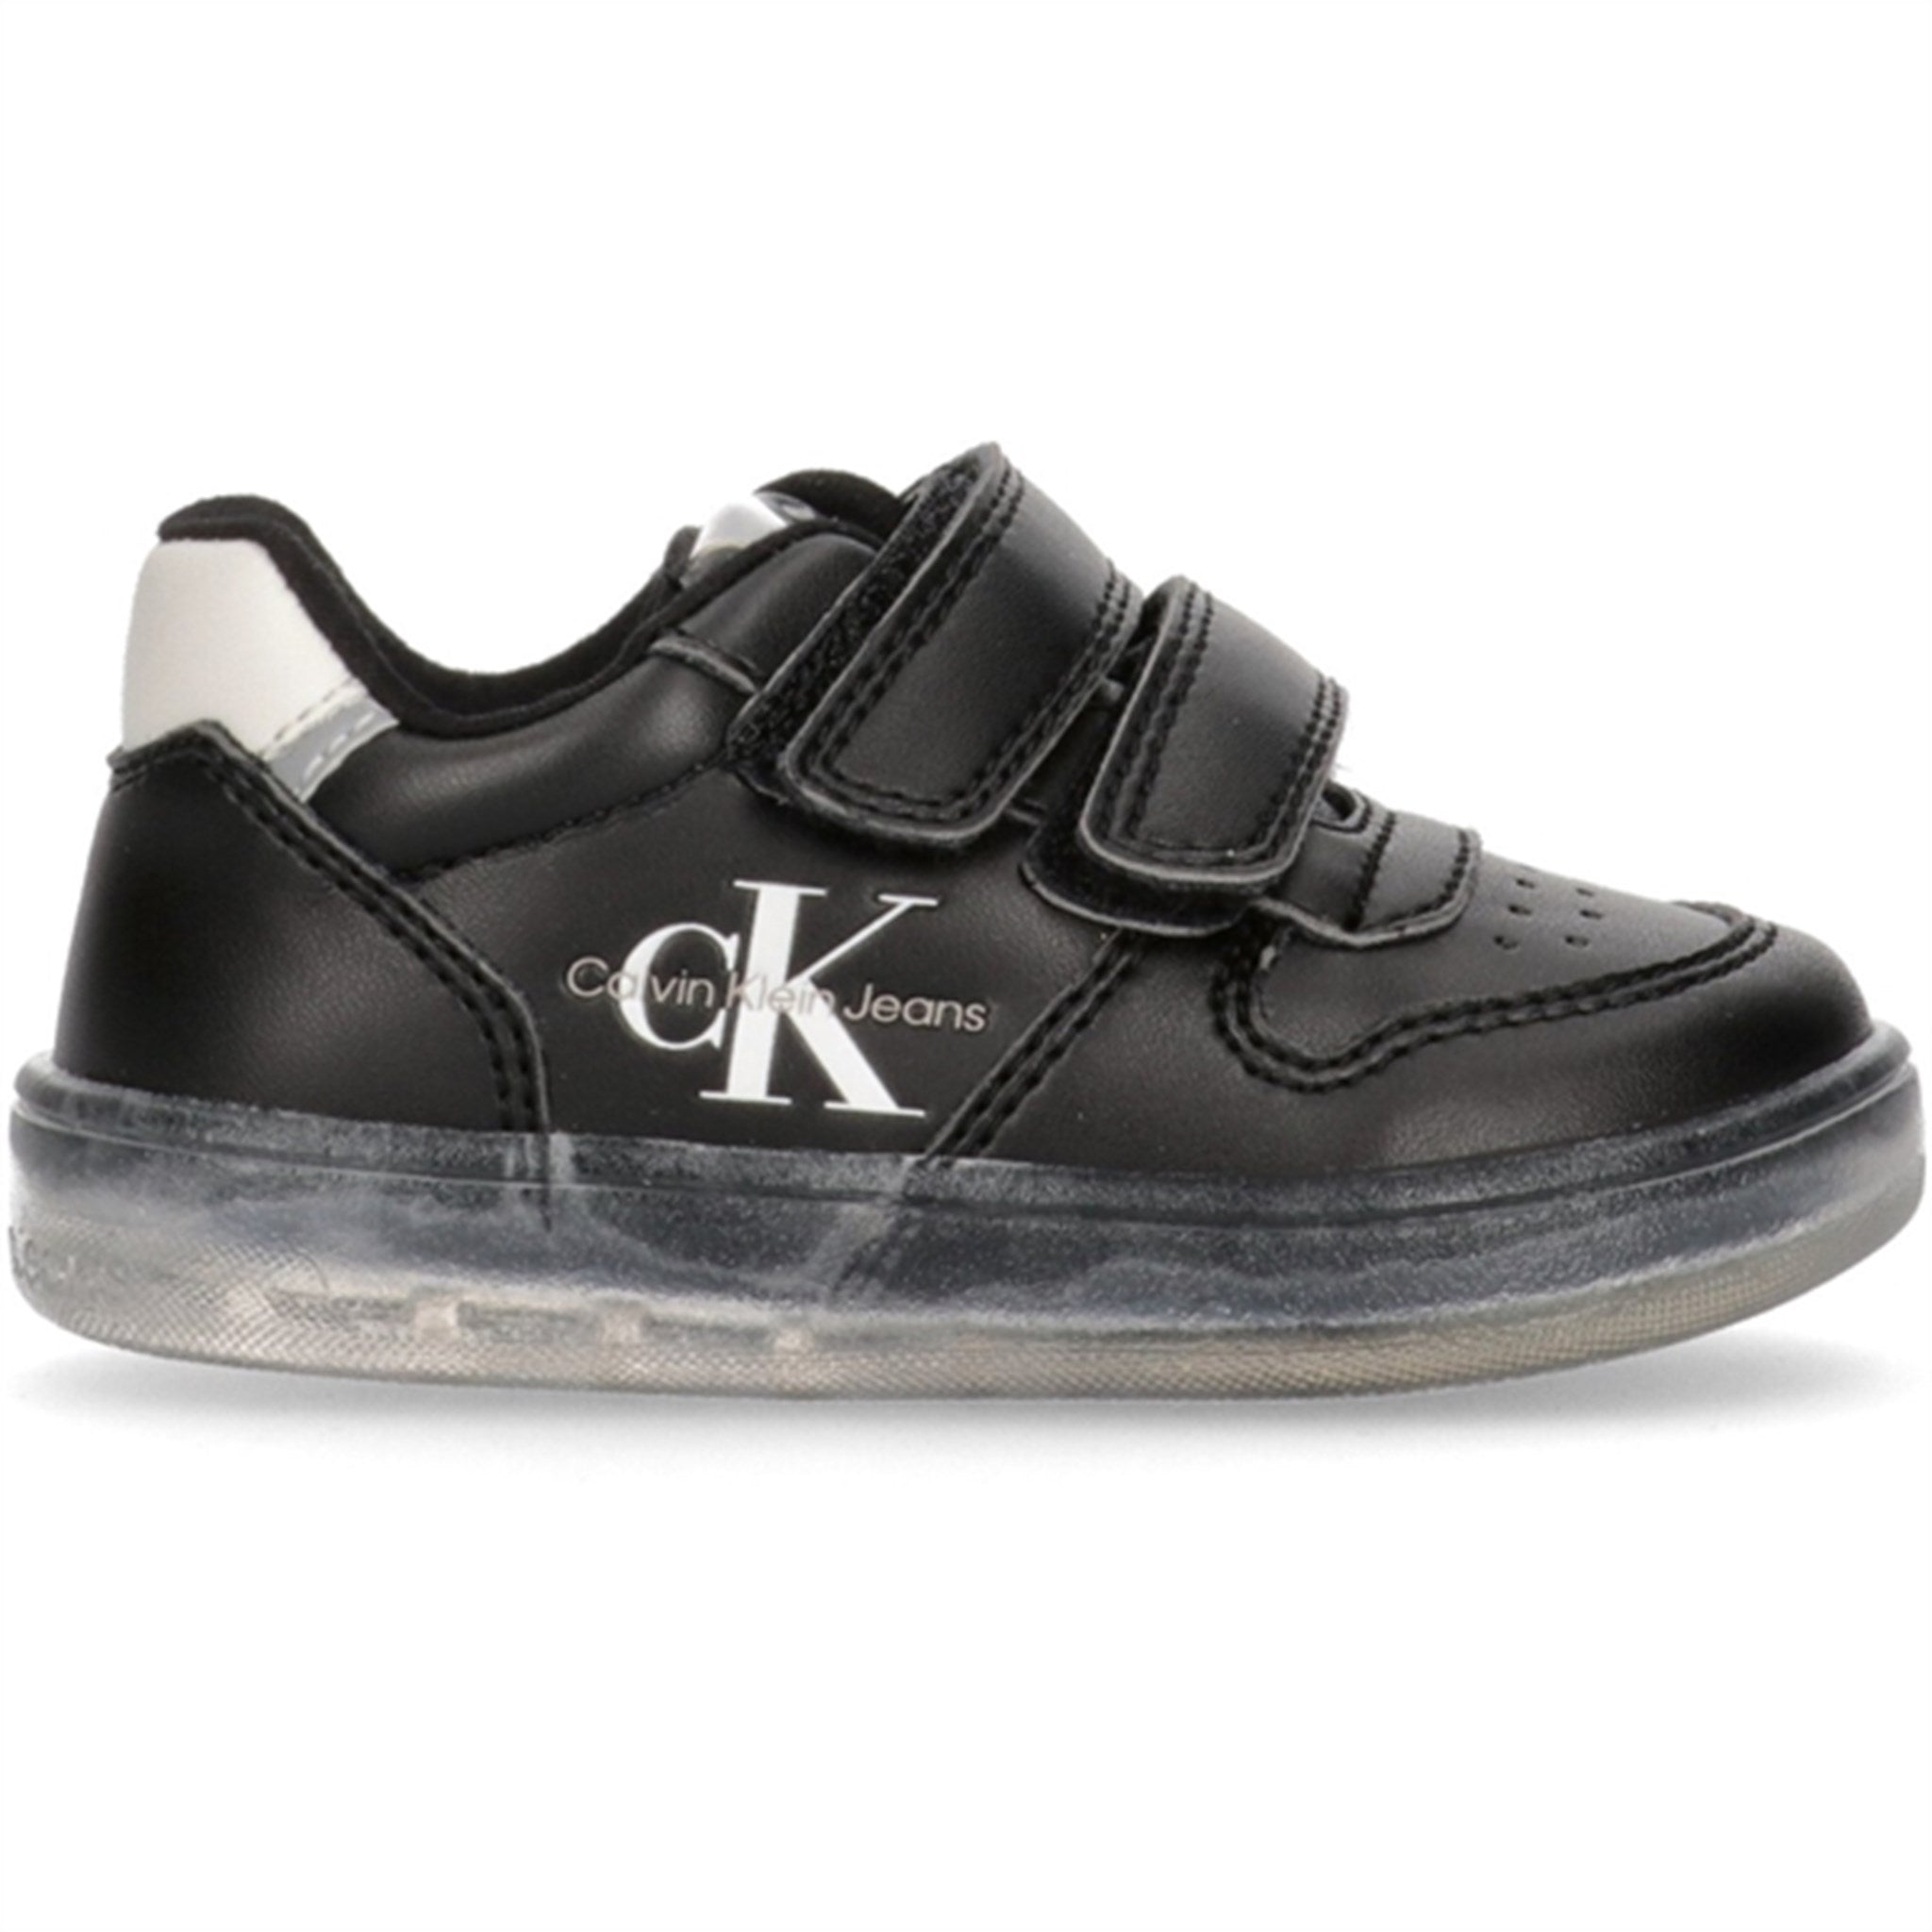 Calvin Klein Low Cut Velcro Sneakers Black 4